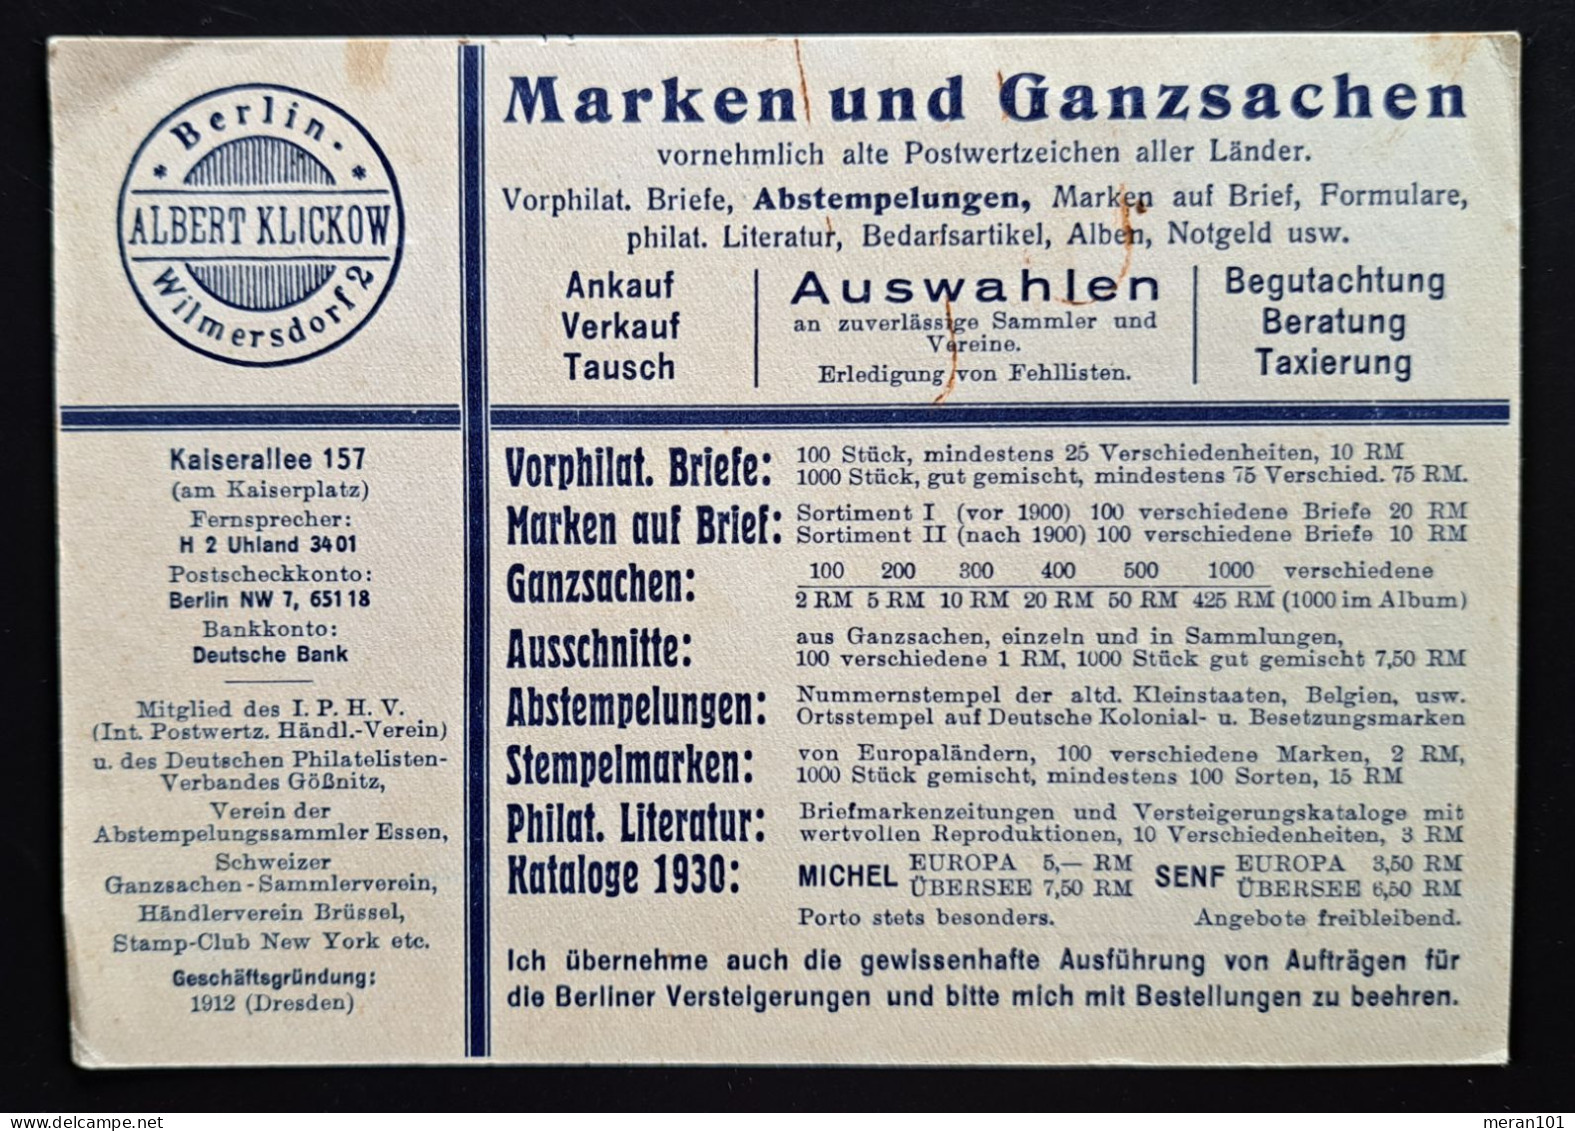 Postkarte Privater Zudruck Berlin-Charlottenburg 1929 - Cartoline